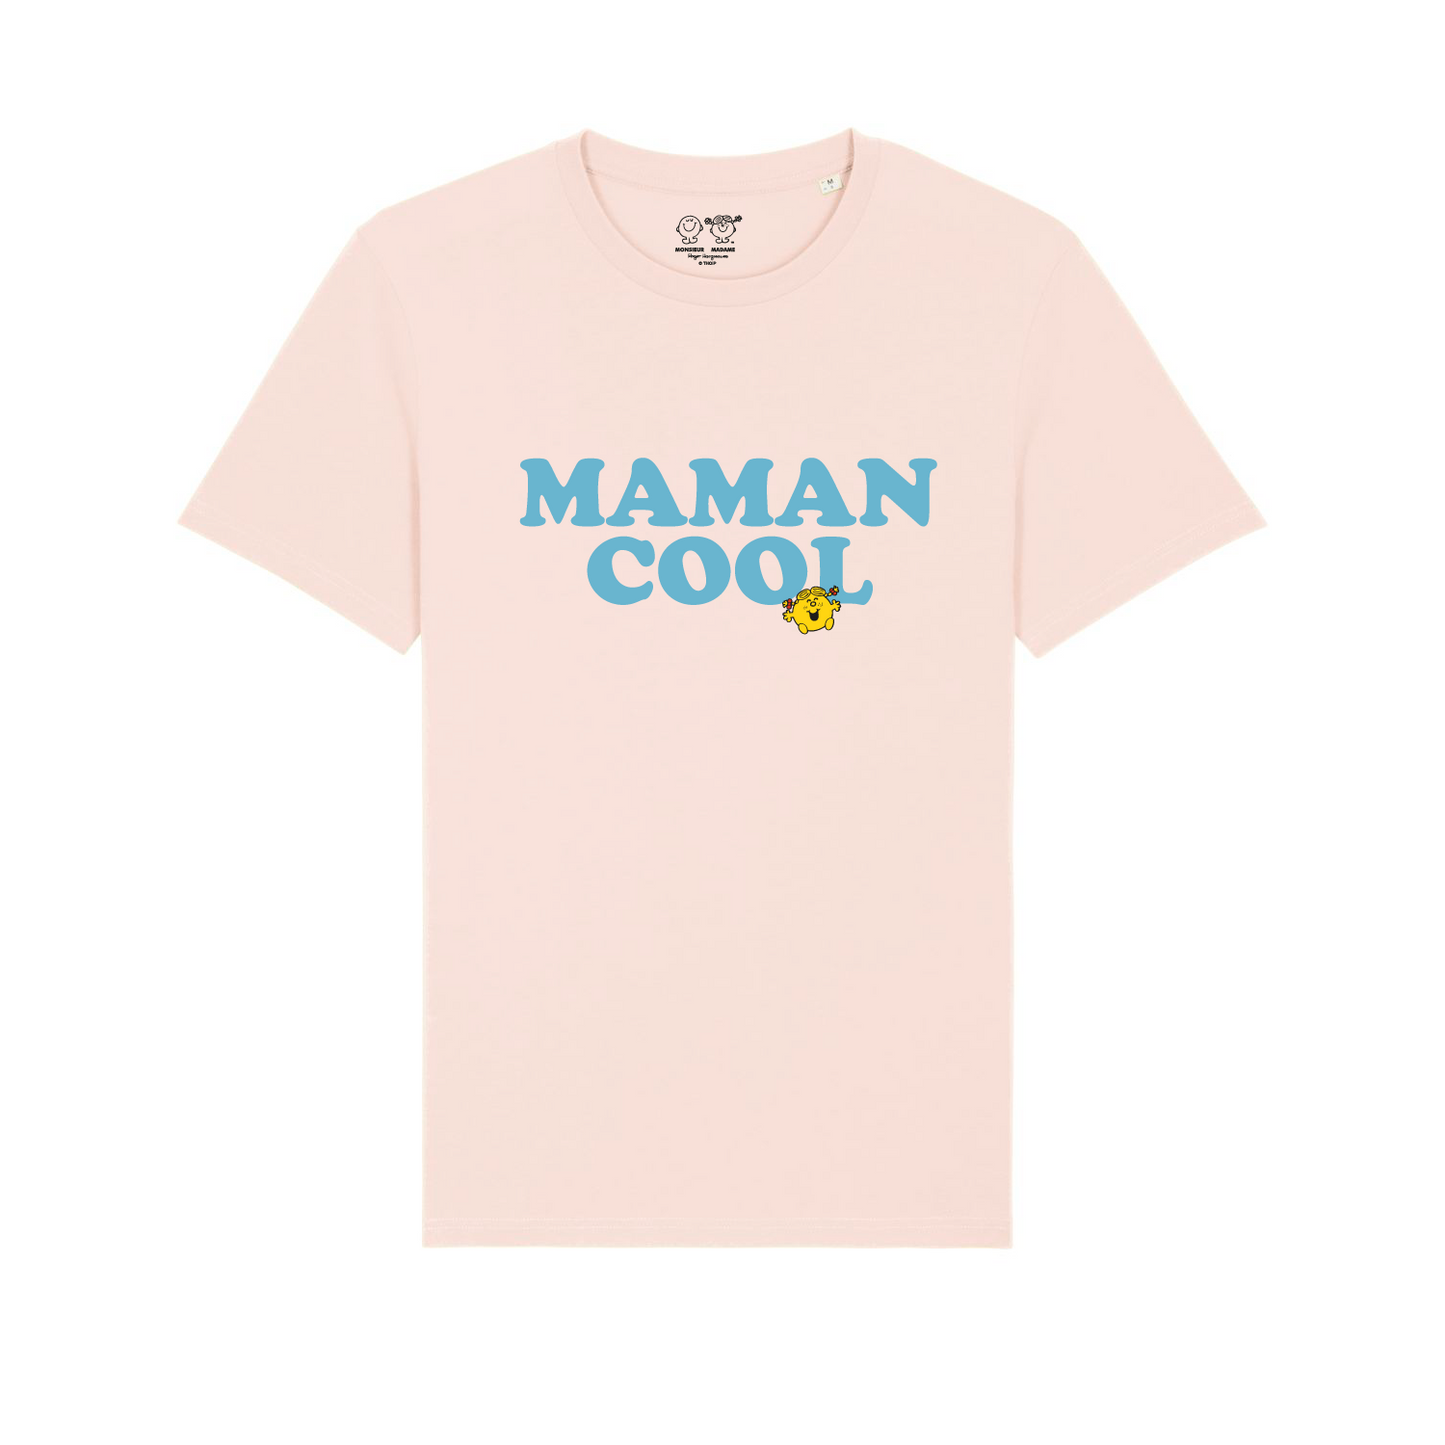 Tshirt - Maman cool (rose) Monsieur Madame